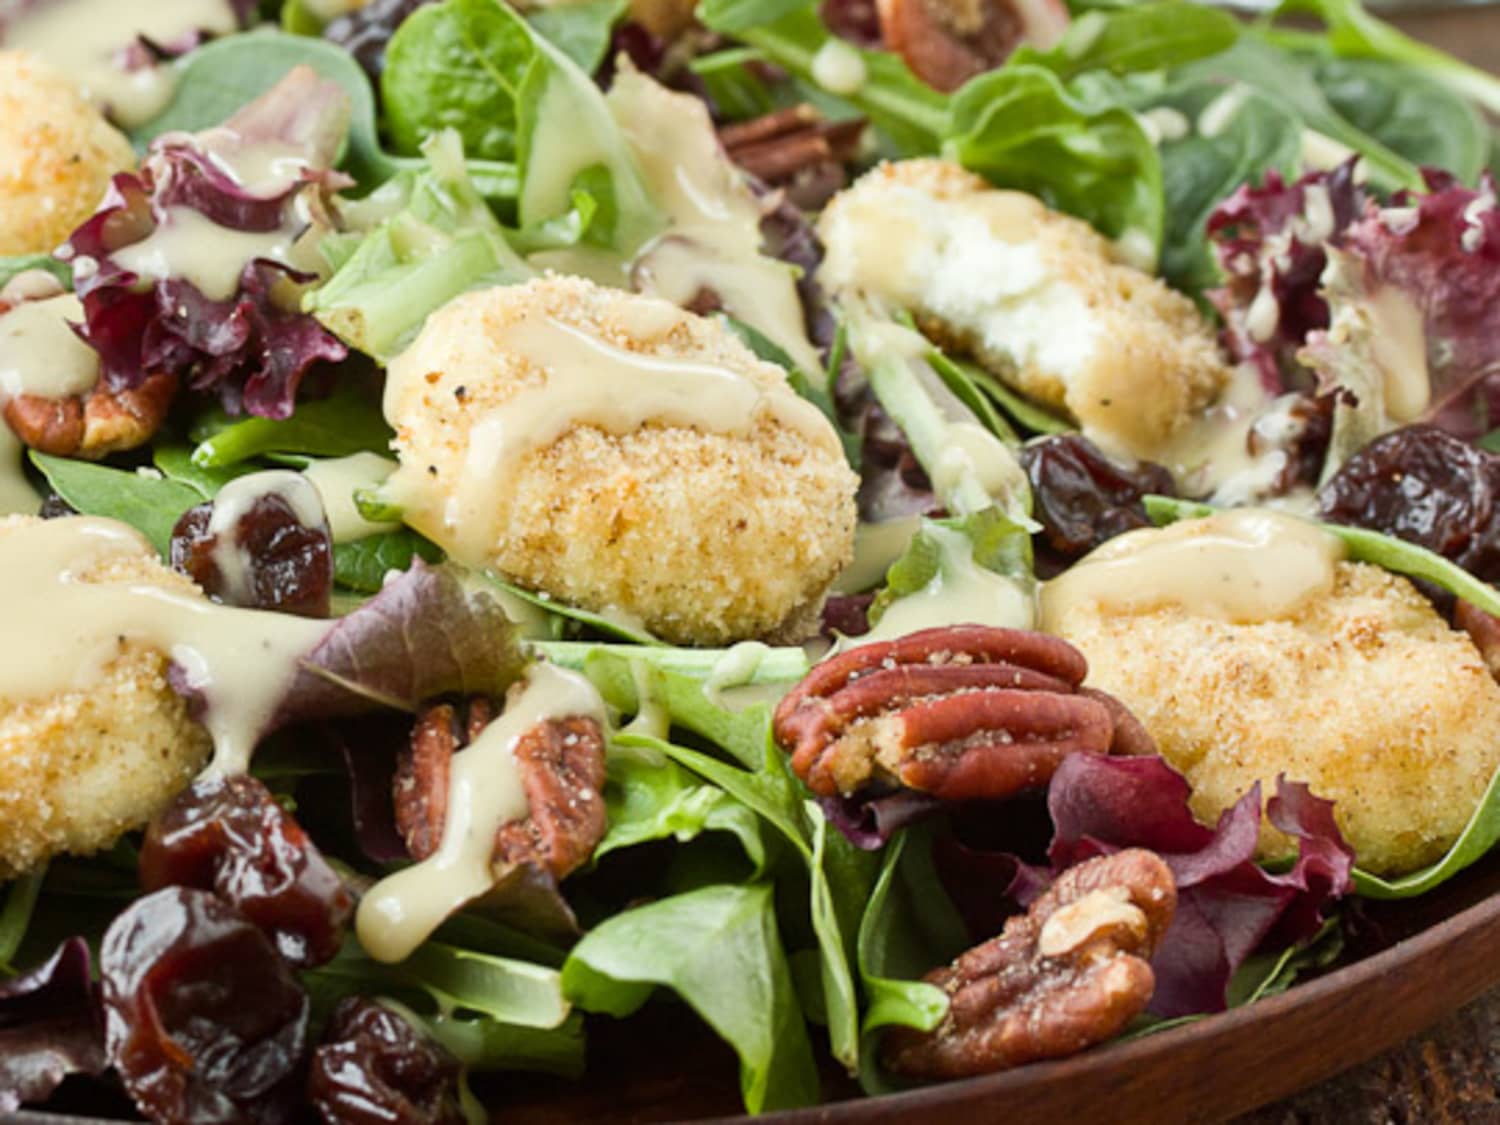 Mixed Greens Salad with Warm Walnut Dressing Recipe 